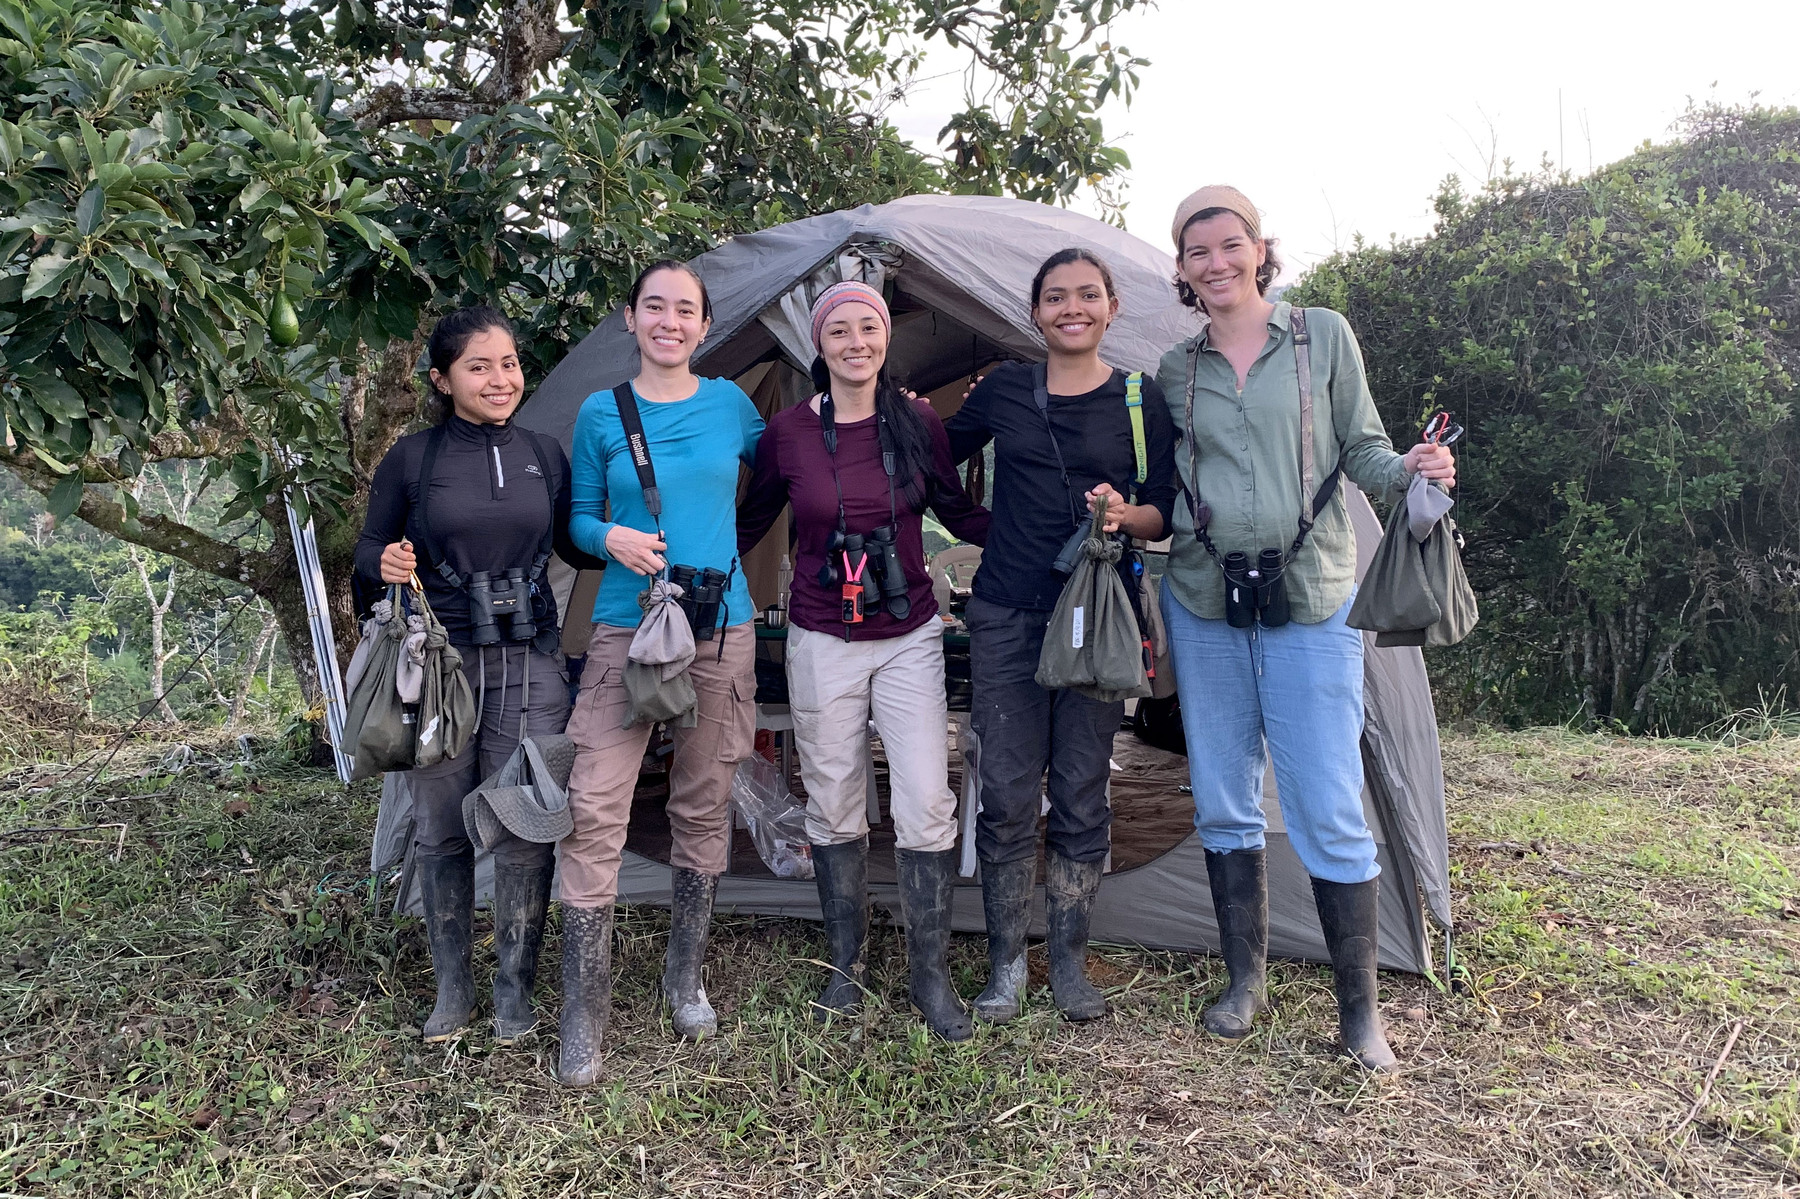 The all-female expedition team included, from left, Jessica Díaz, Daniela Garzón, Juliana Soto, Estefanía Guzmán and Natalia Ocampo. Not pictured: Nelsy Niño, Katherine Certuche and Natalia Pérez.